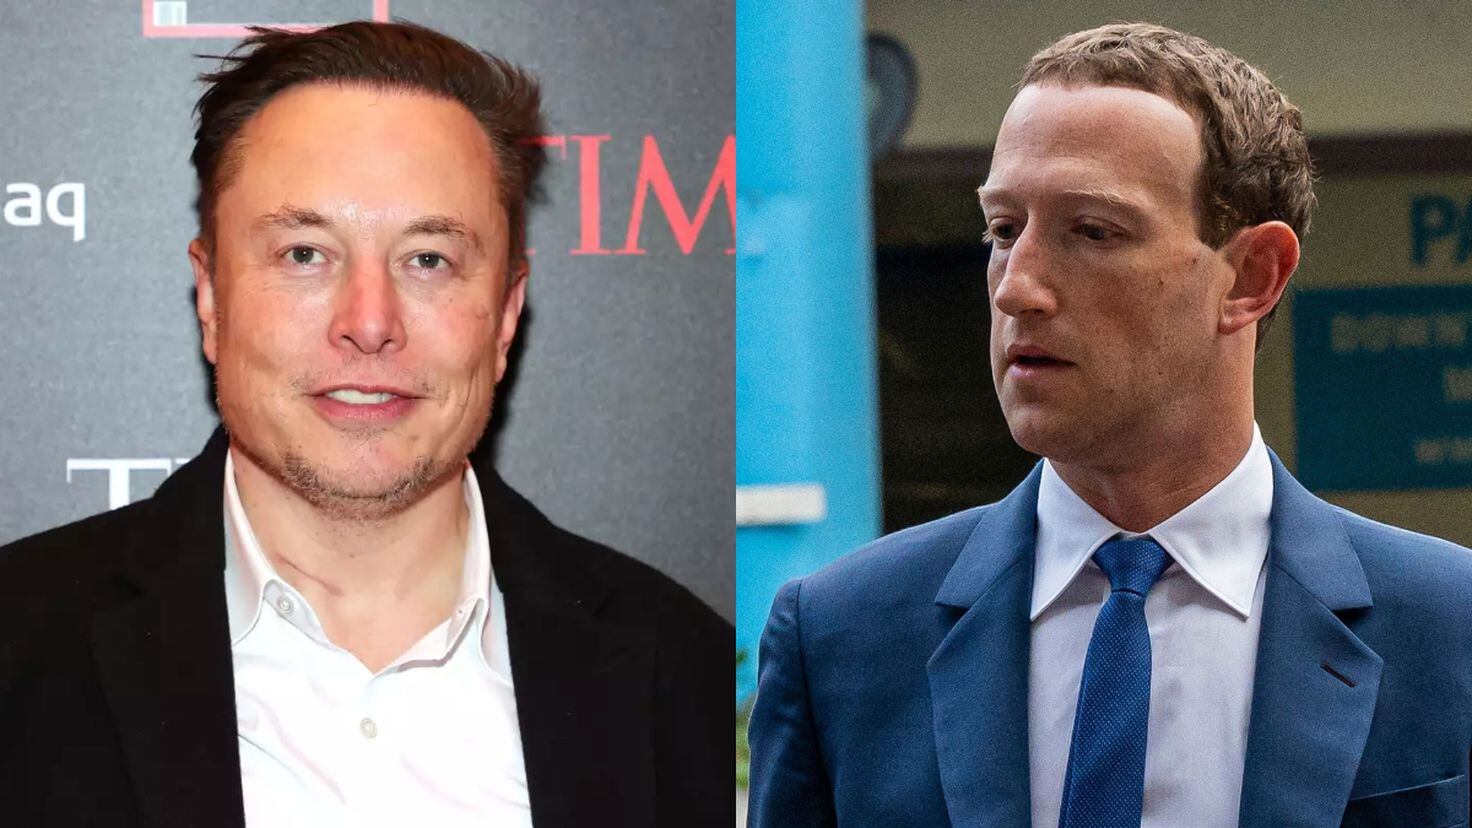 Dana White: “Elon Musk vs. Mark Zuckerberg will be the best fight in history”